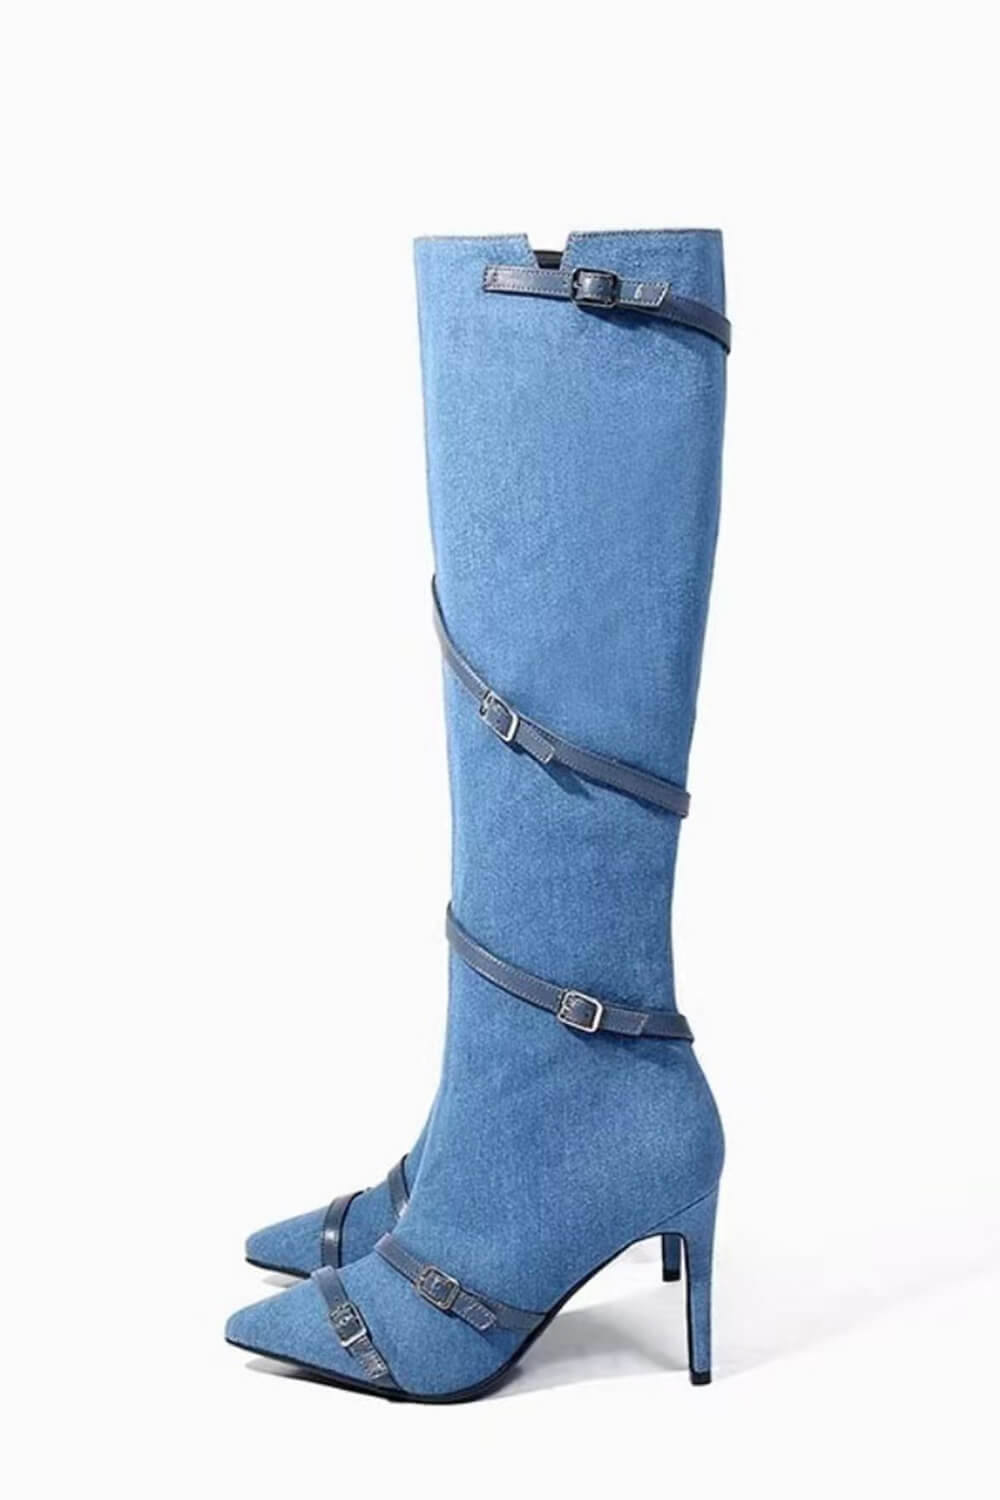 Blue Denim Strap Pointed Toe Stiletto Knee High Boots